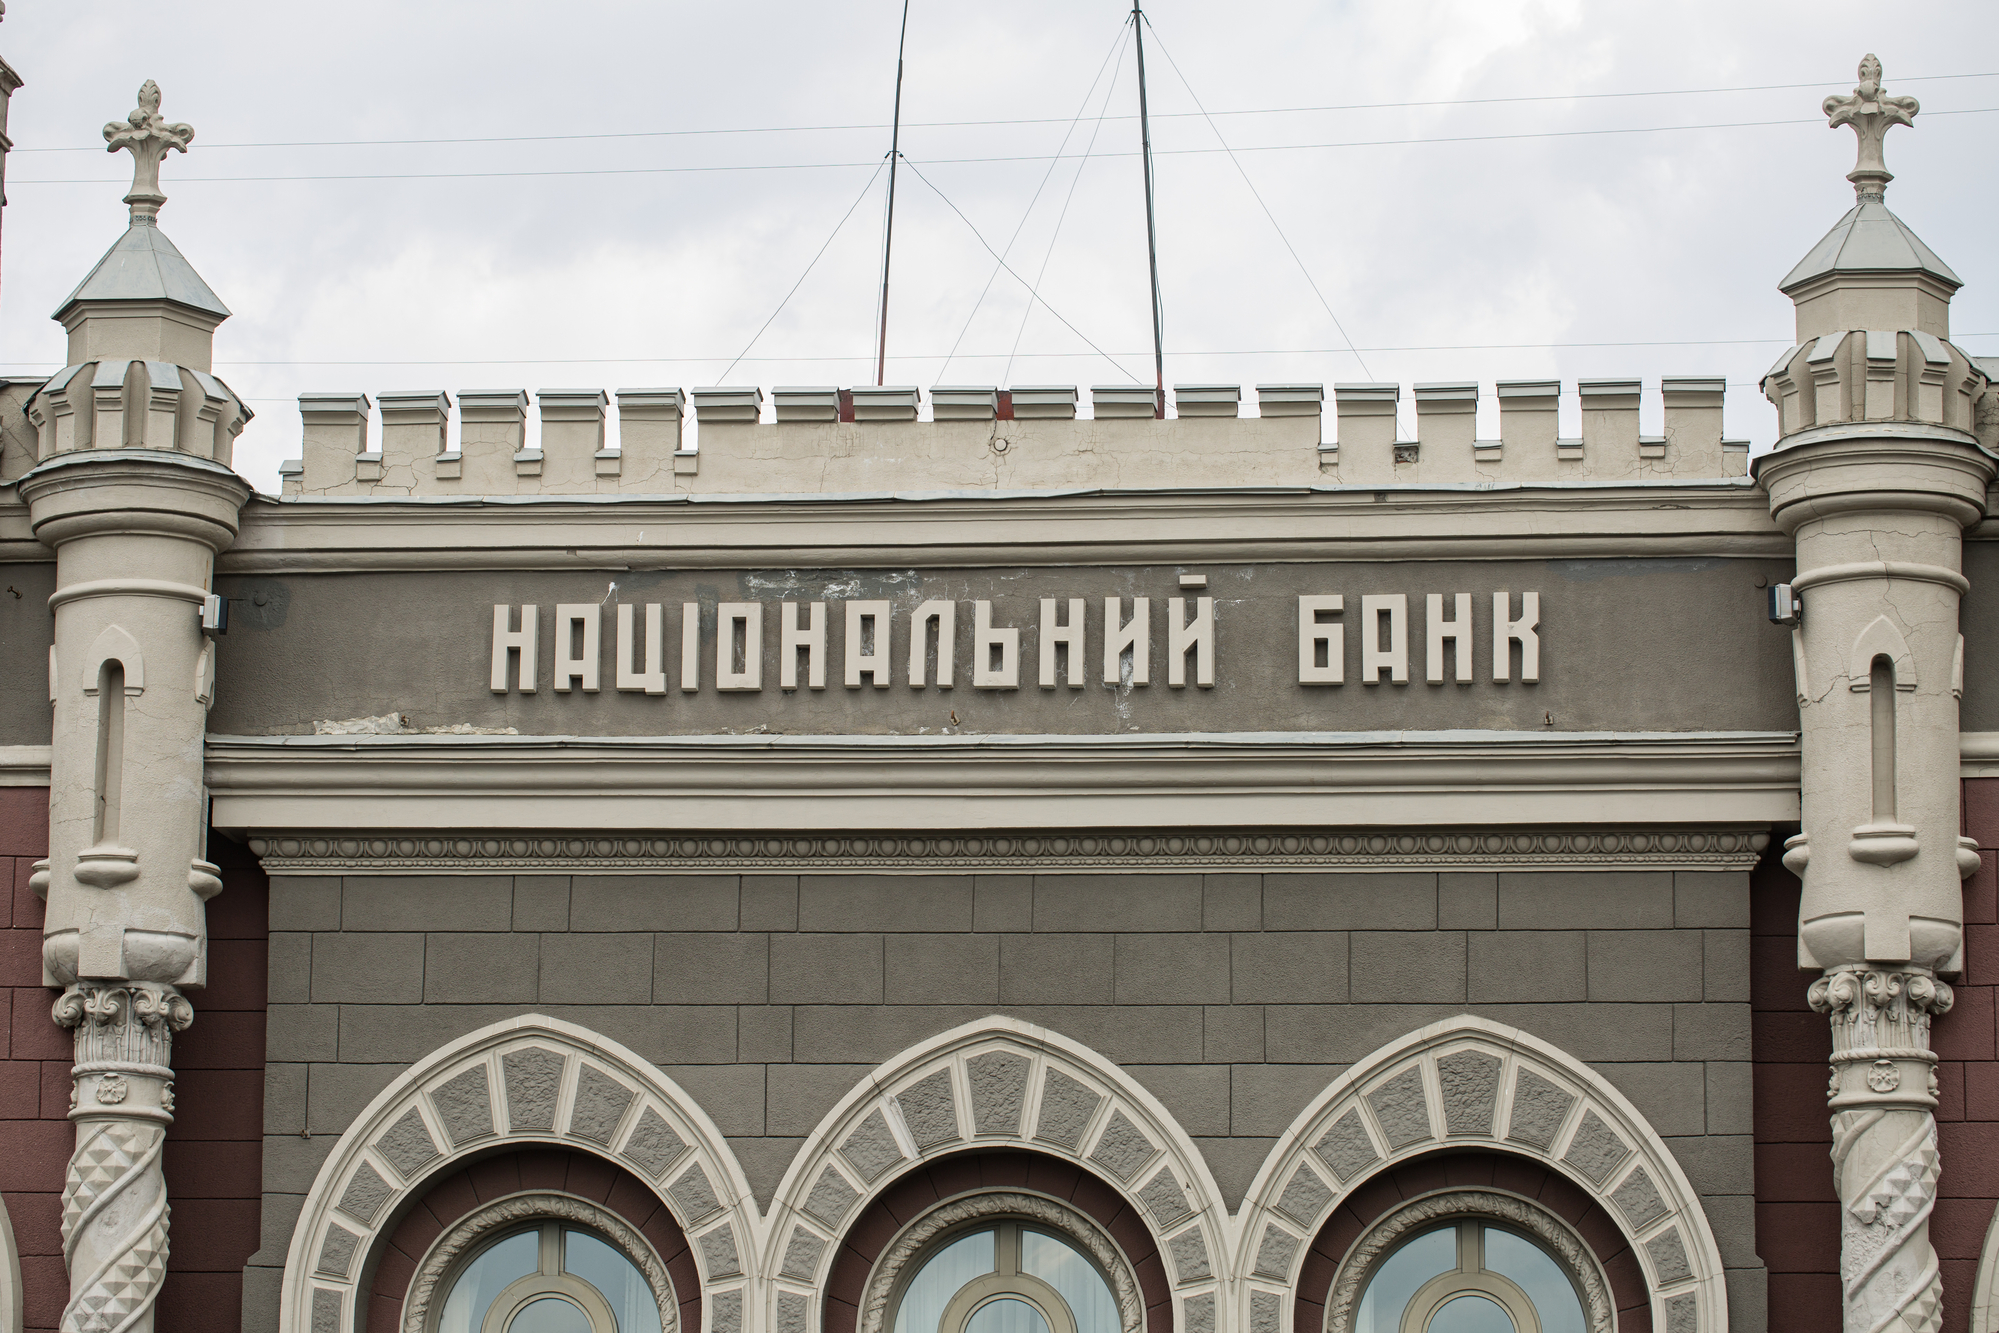 National Bank of Ukraine facade fragment